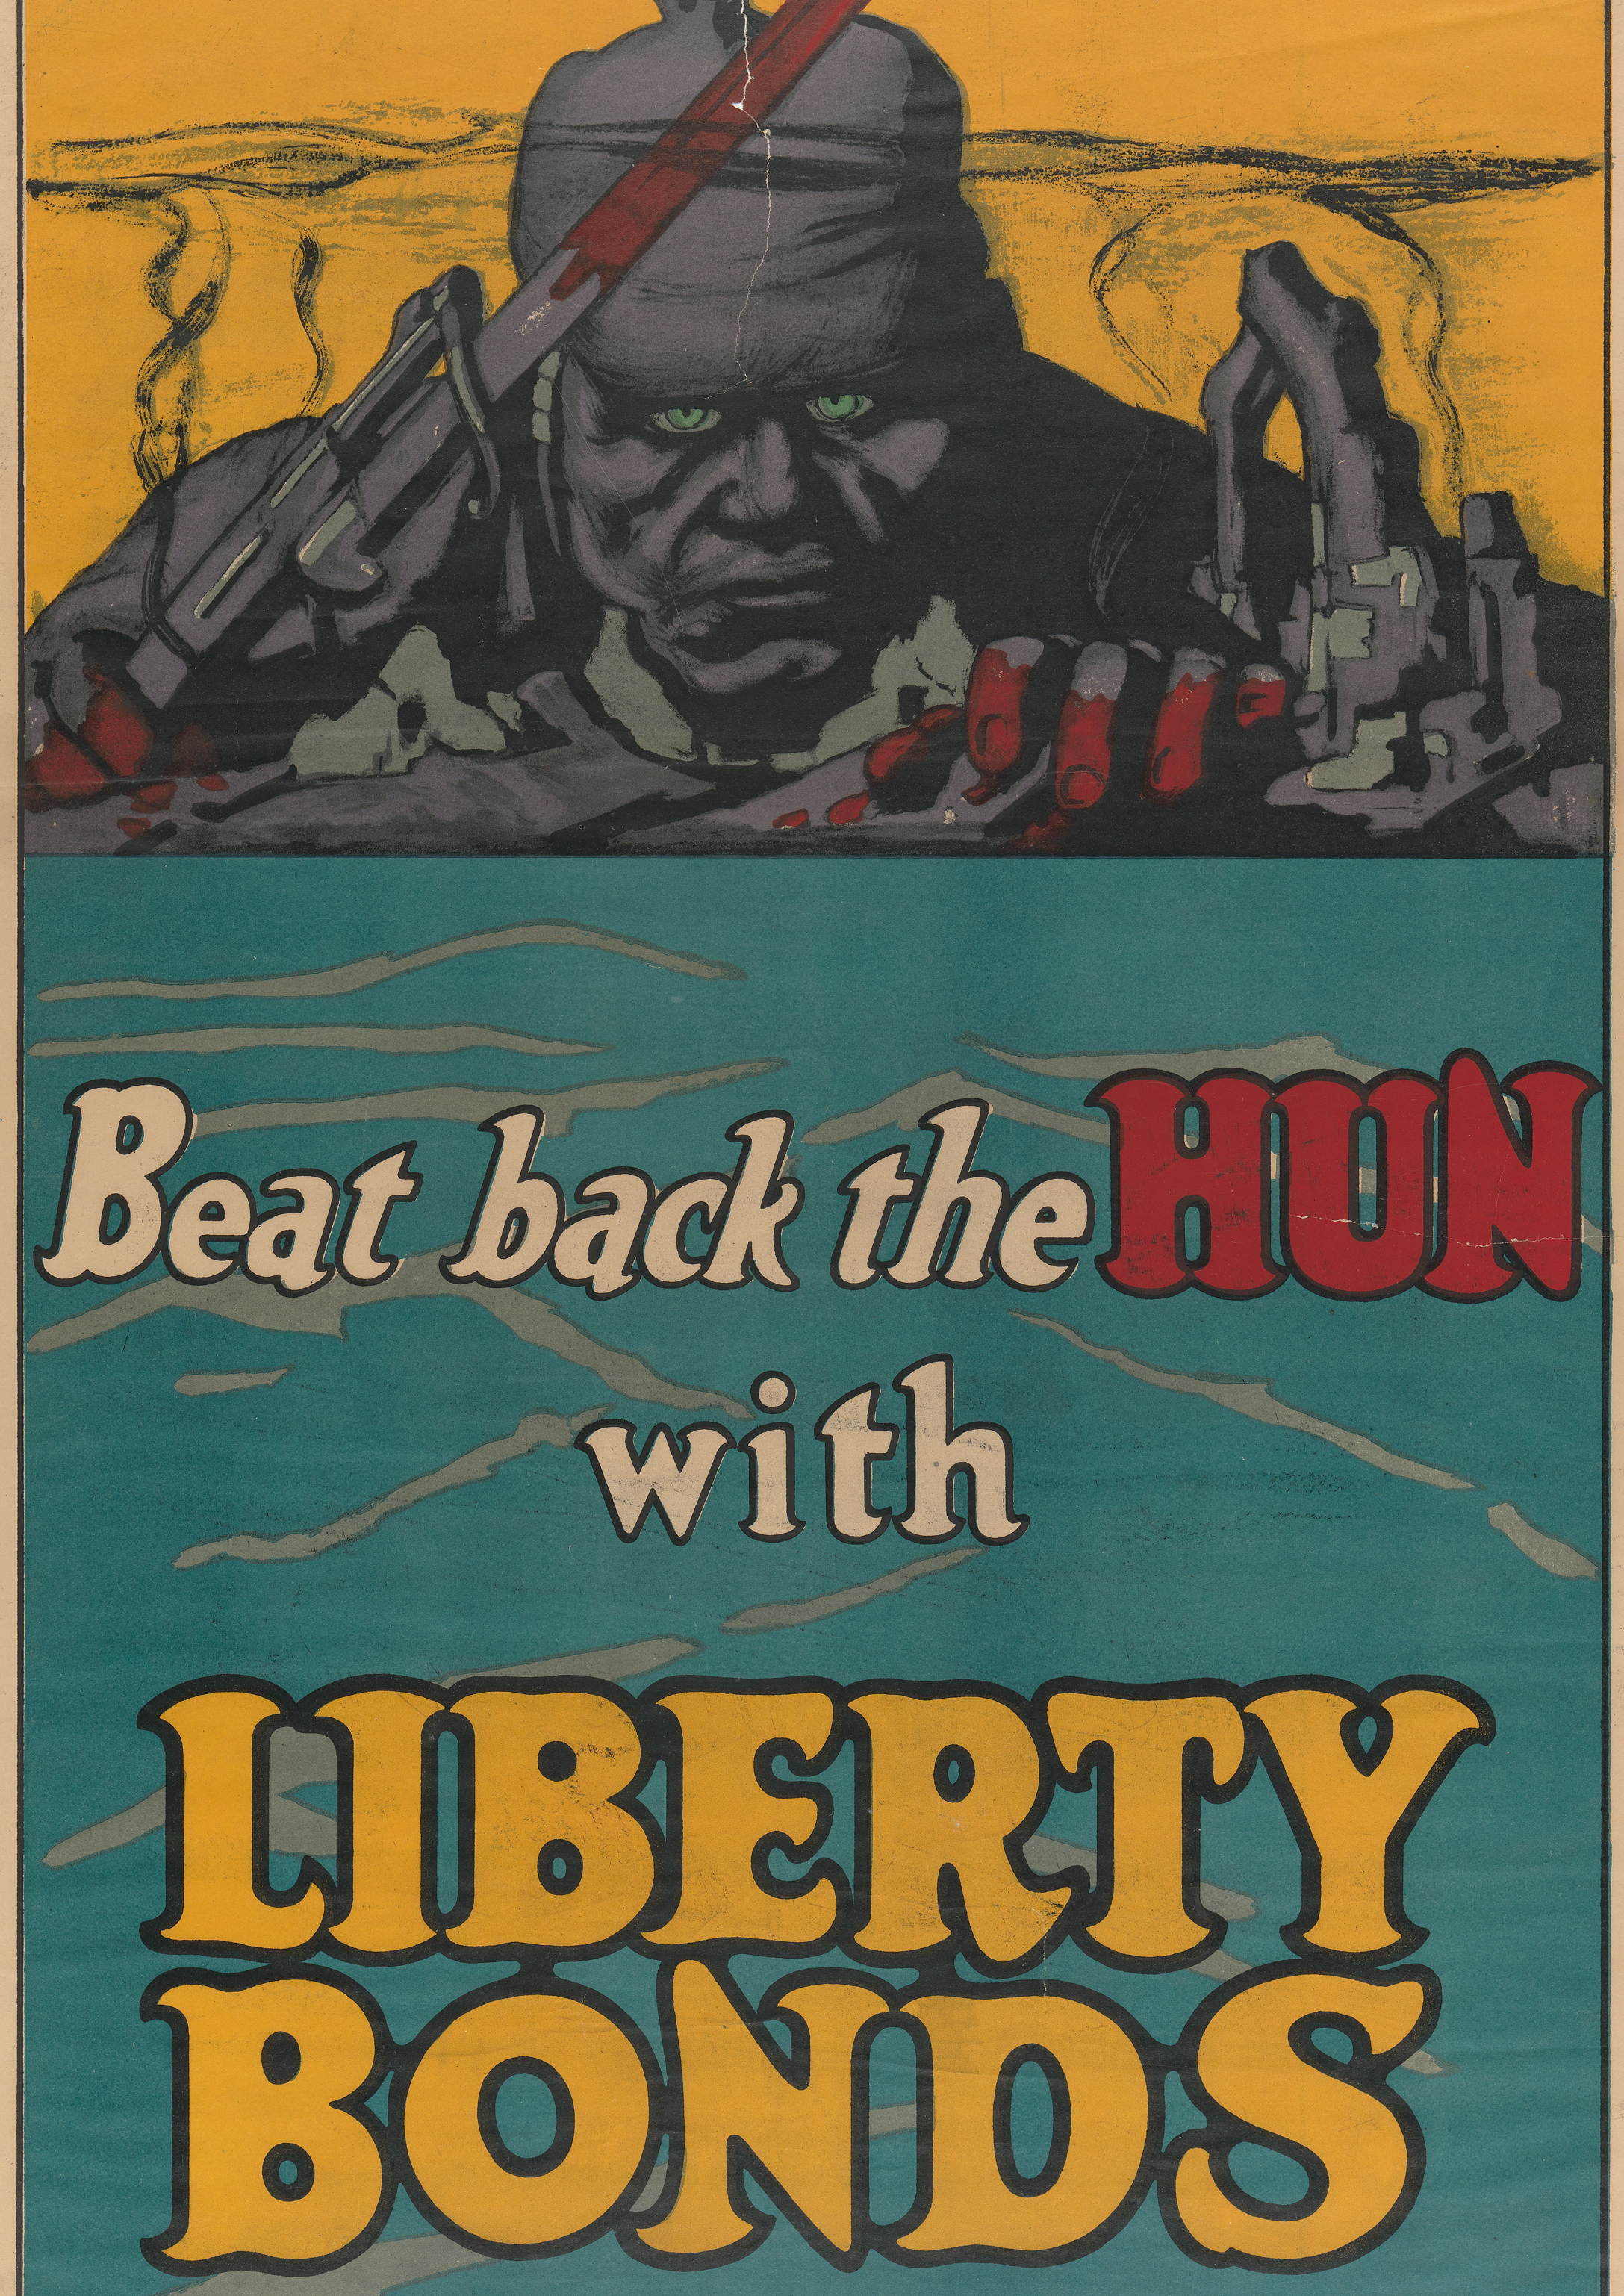 Liberty Bonds advertisement 